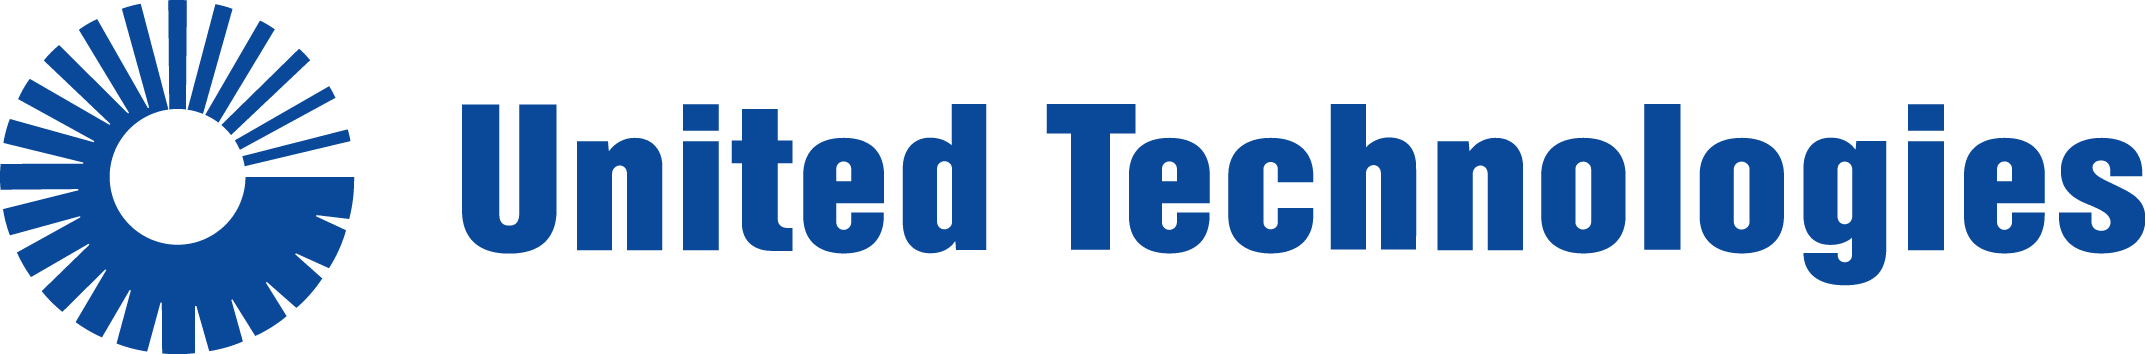 UnitedTechnologies-Corp-logo